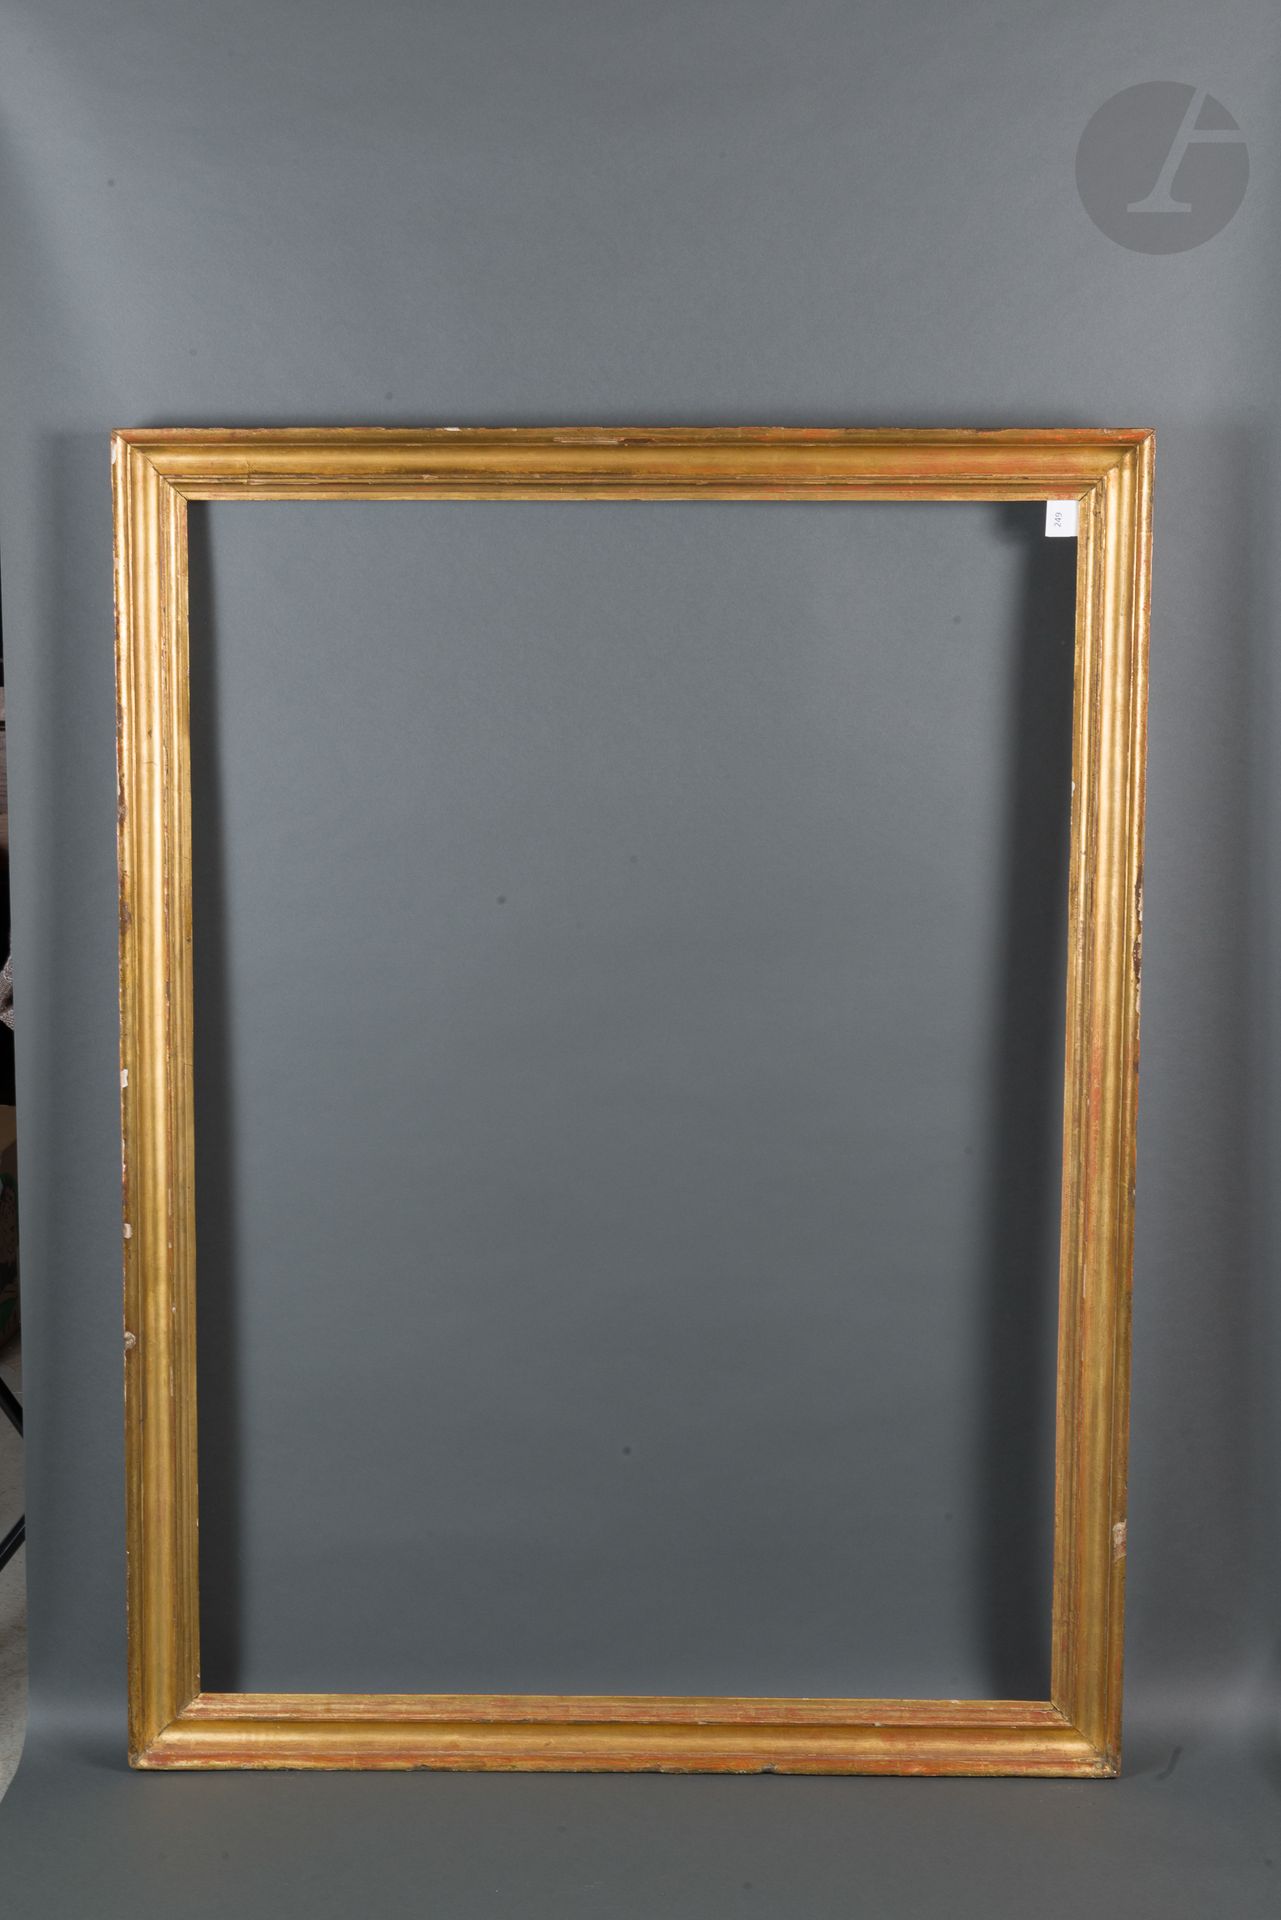 Null 模制和镀金的木框。
意大利，18世纪末。
90.3 x 125.4厘米 - 外形：7厘米